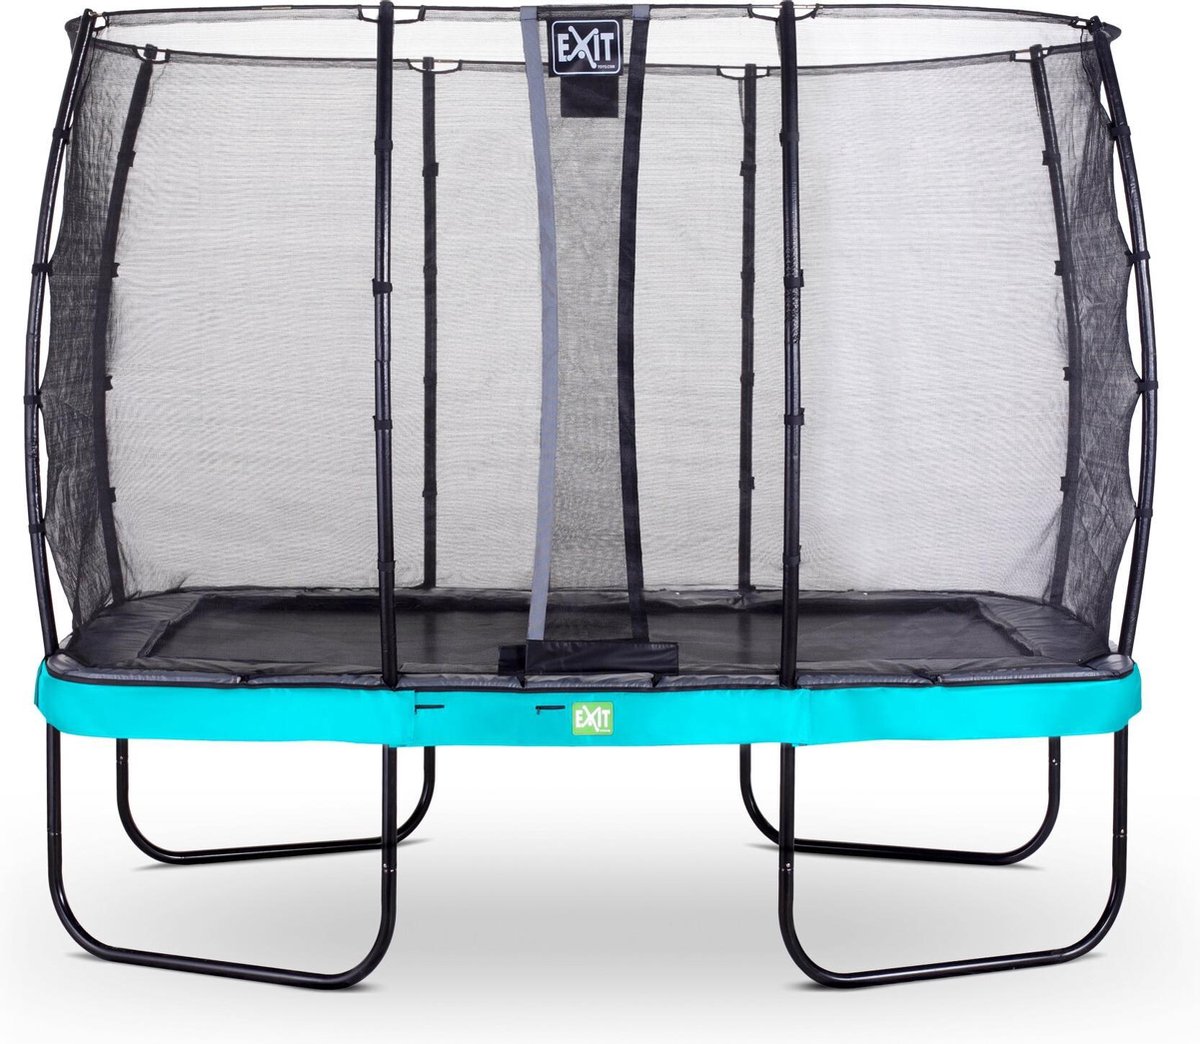 EXIT Elegant trampoline 214x366cm met Economy veiligheidsnet - blauw